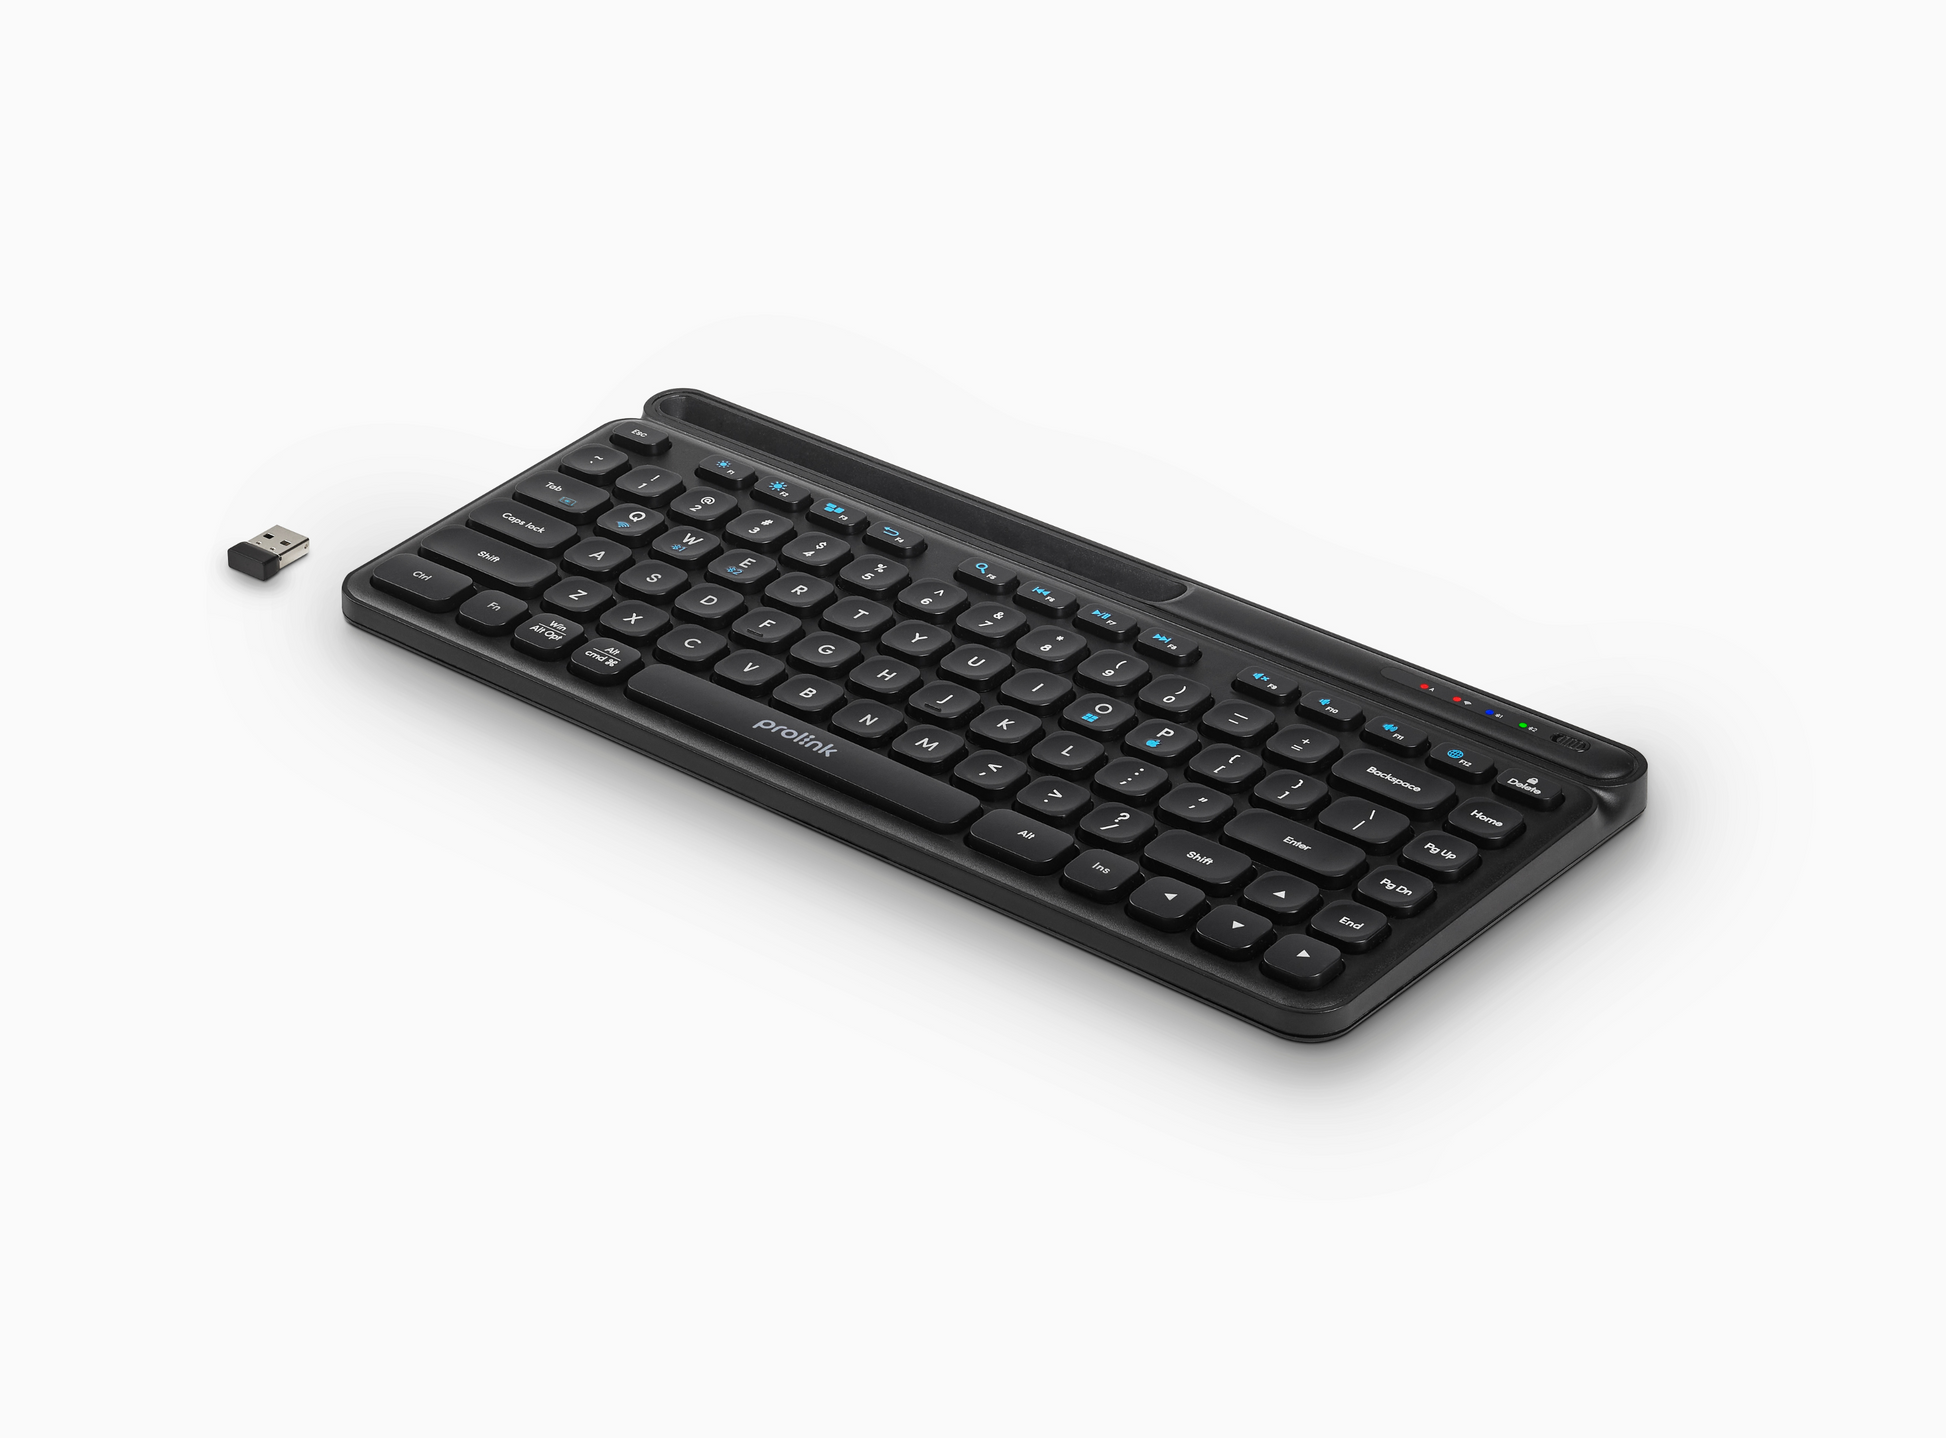 Prolink Multi Device Wireless Keyboard Black - Urban Gadgets PH